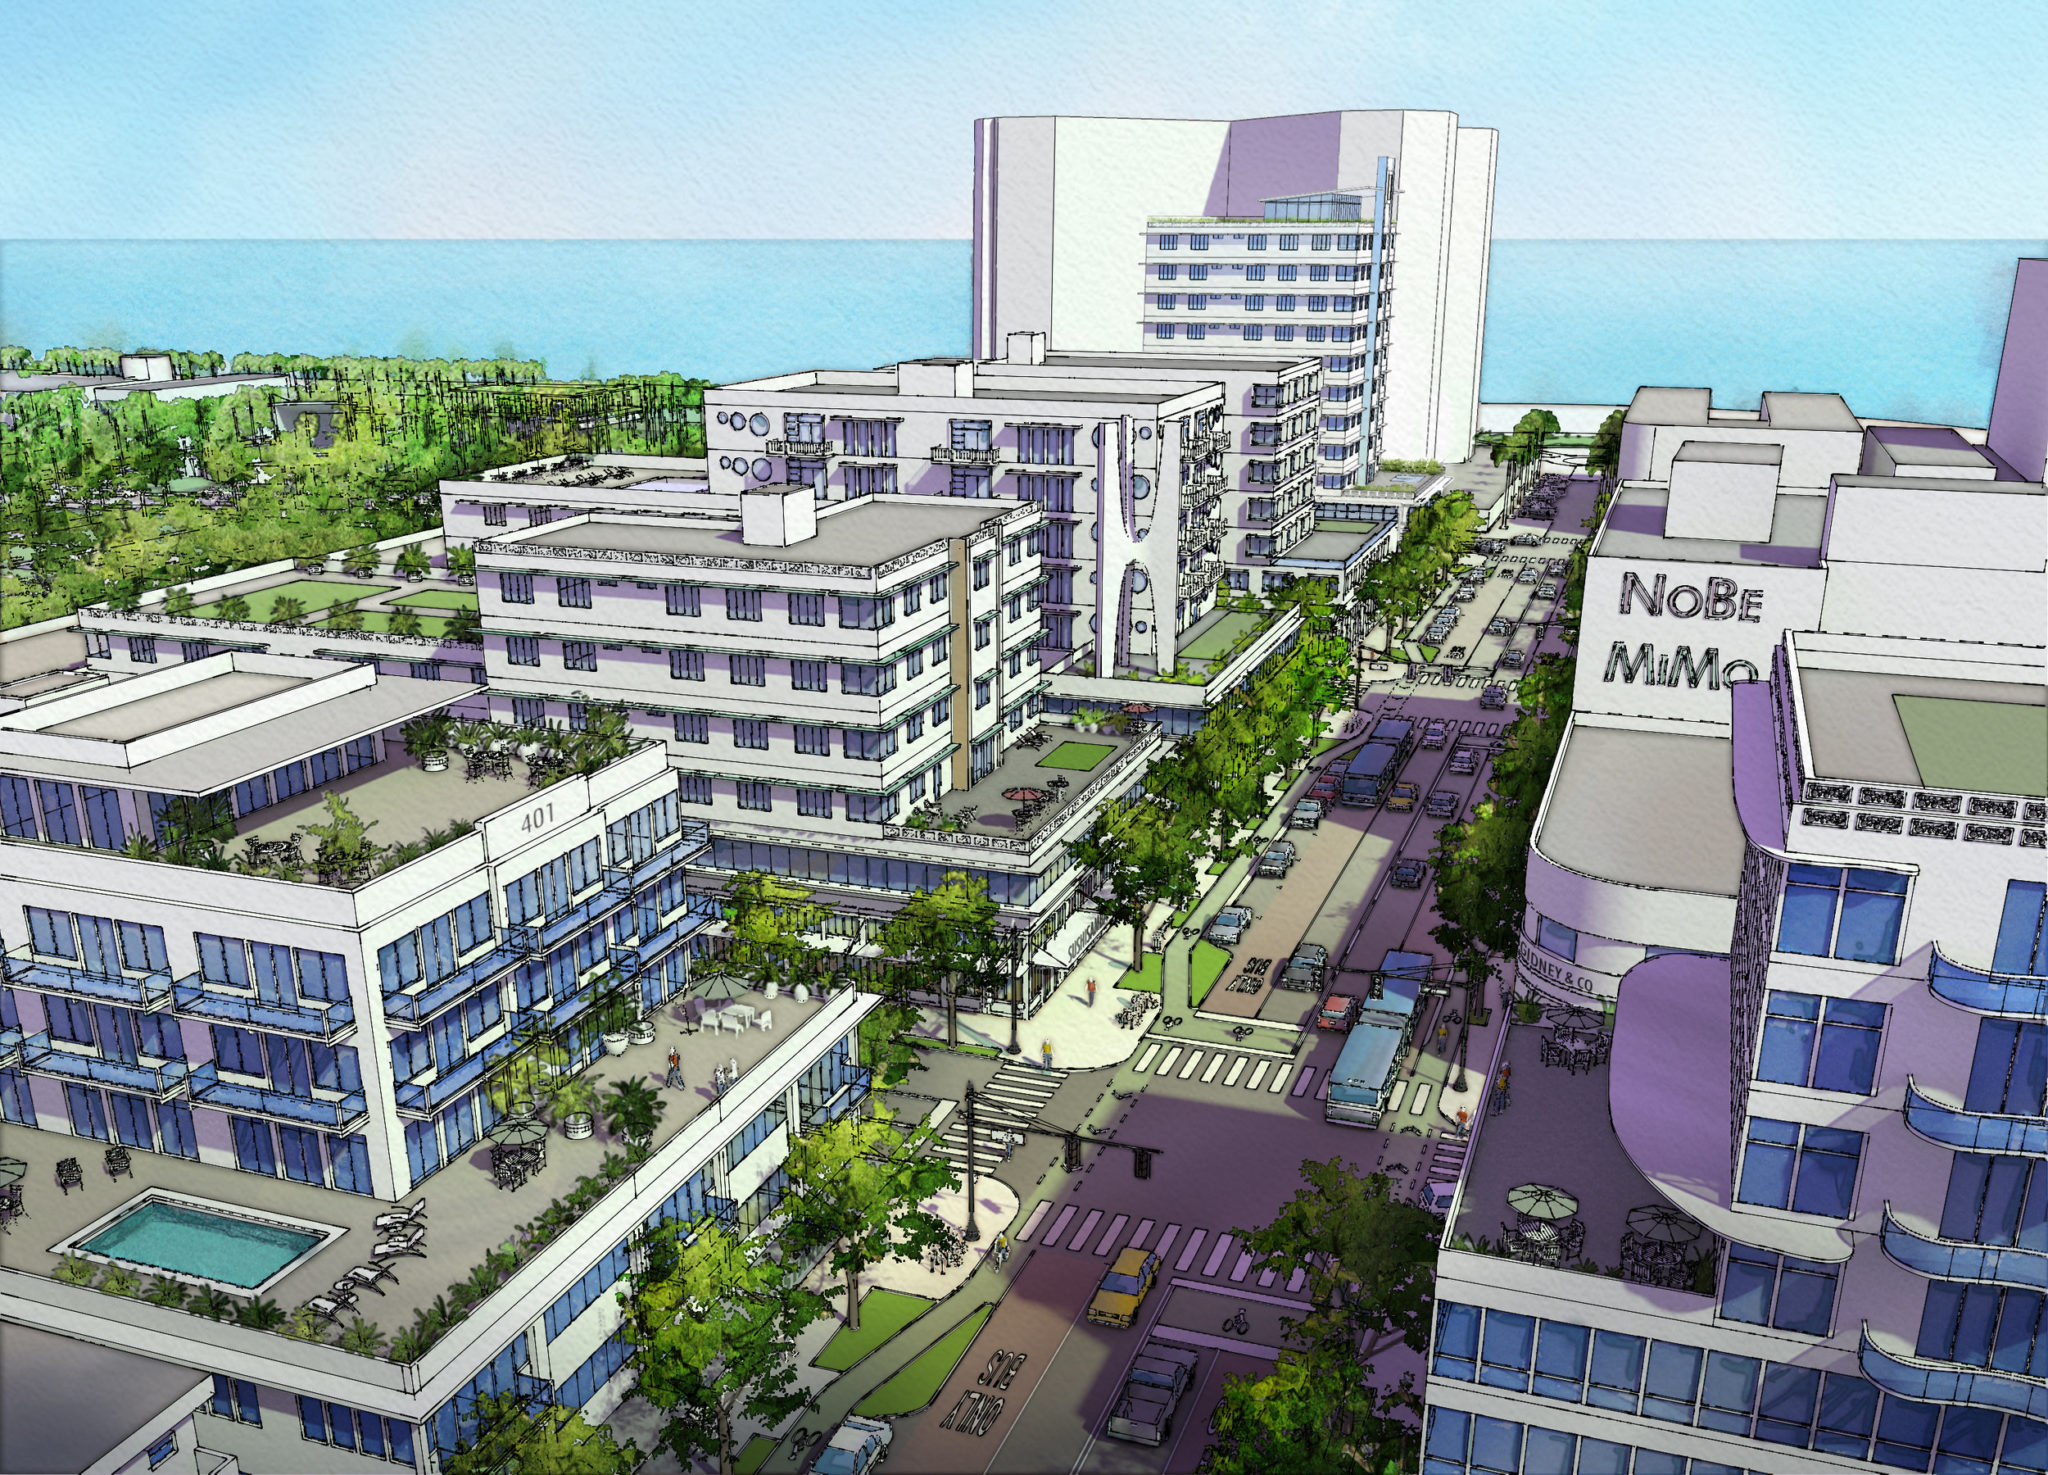 North Beach Pursues Master Plan for 10-Block Revitalization